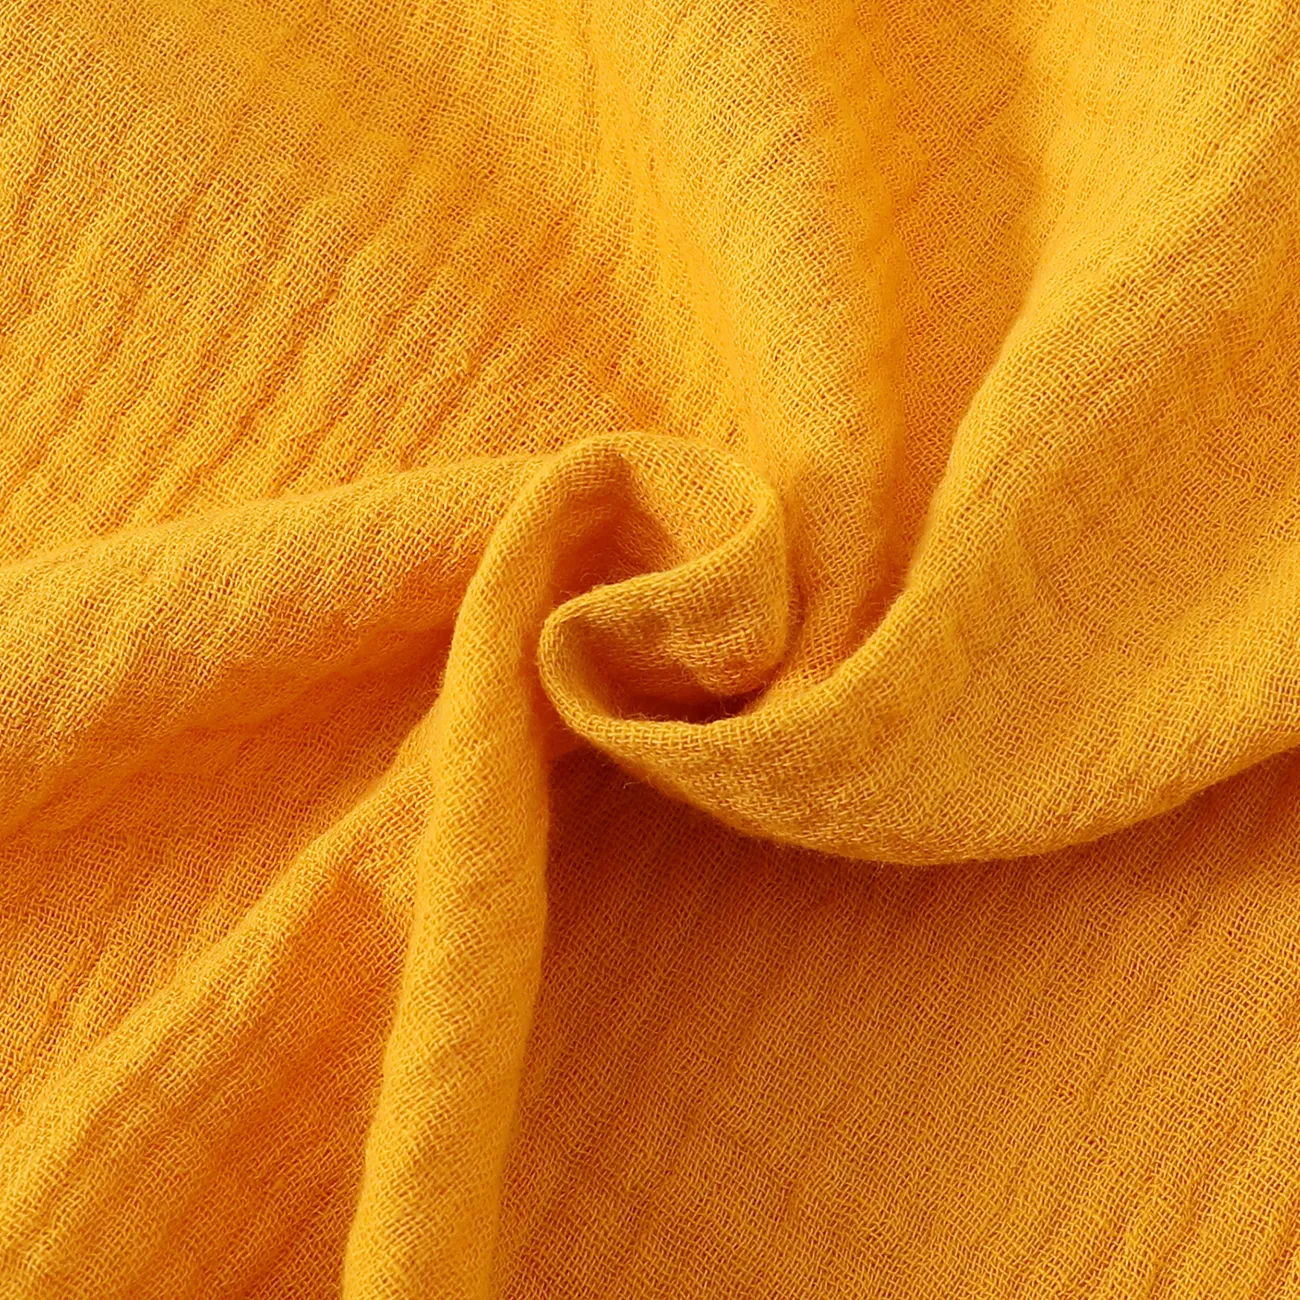 2pcs Toddler Girl/Boy 100% Cotton Basic Solid Henley Shirt and Pants Set Yellow big image 1